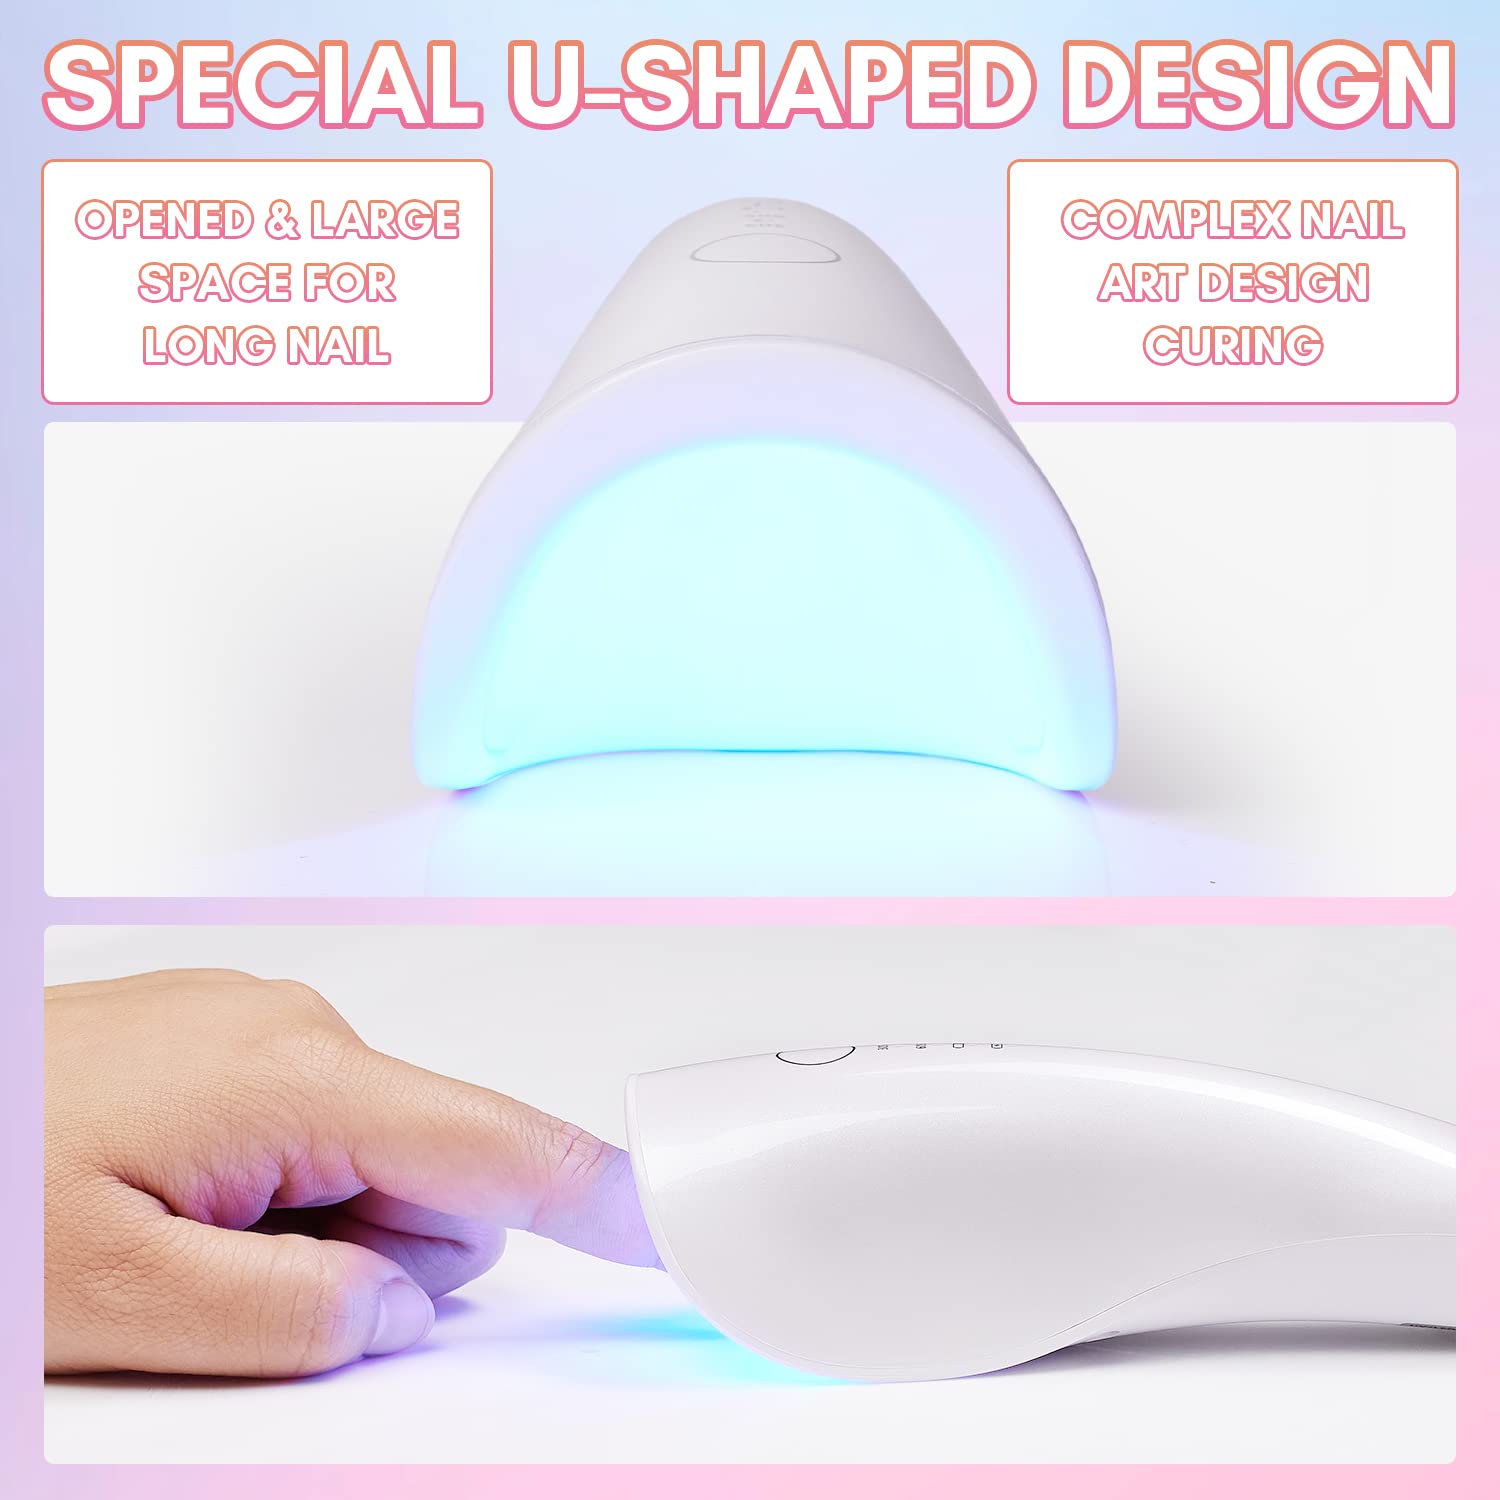 Mini USB UV Lamp for Resin / Nail Art (6W 45-60S) - Oytra